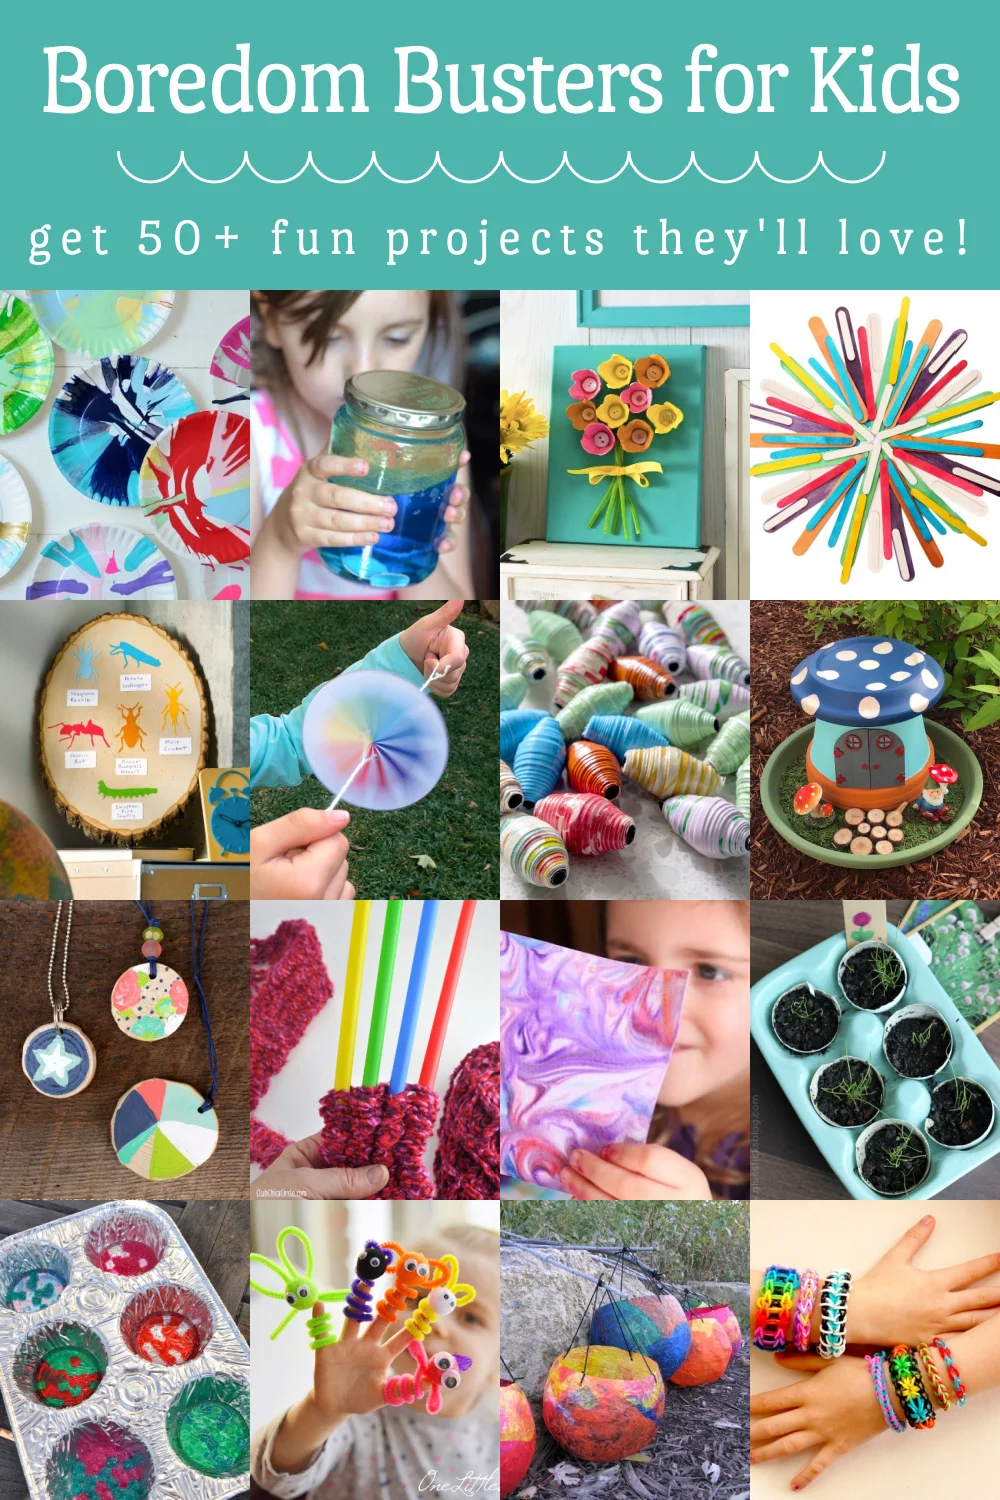 Crafts for Teens & Tweens: 50 Awesome Ideas! - Mod Podge Rocks